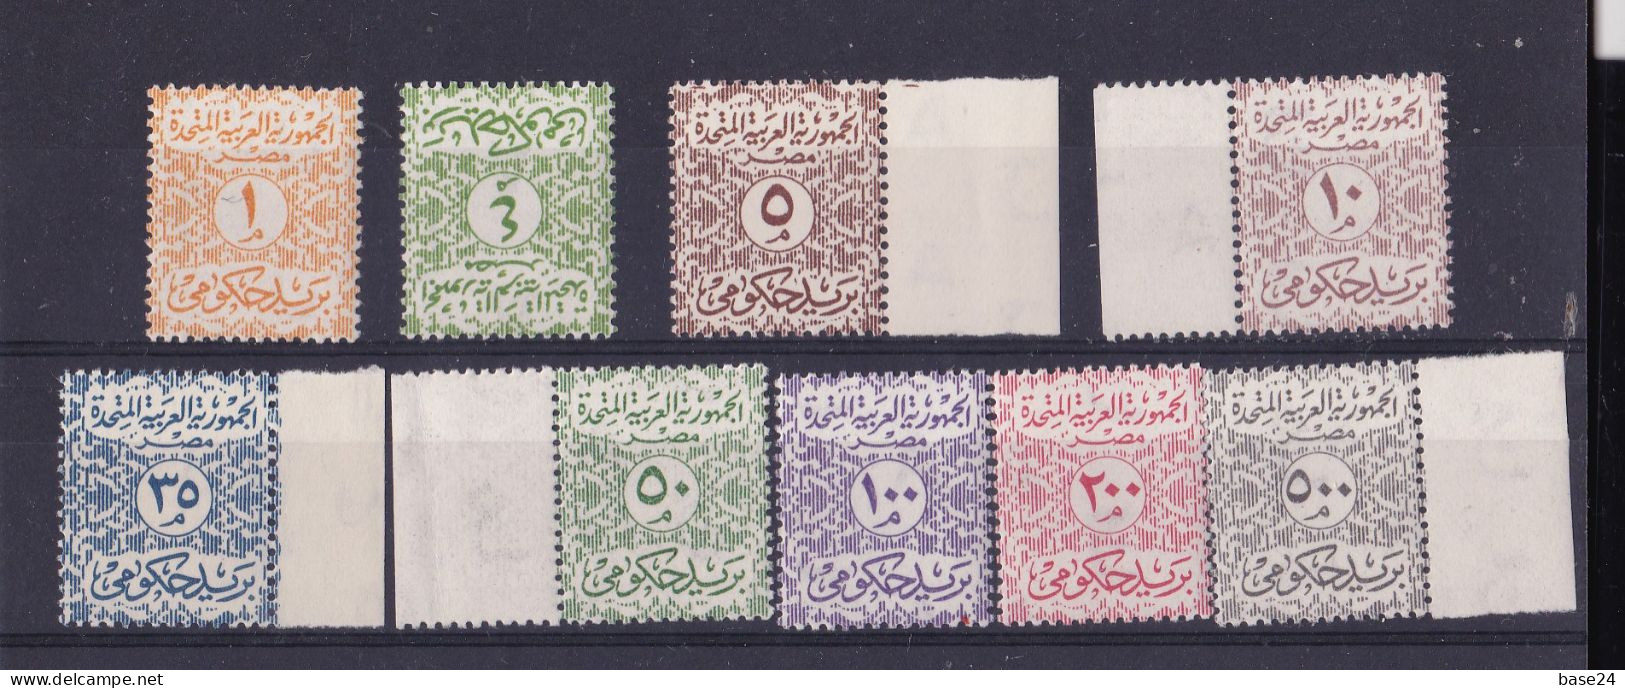 1962 Egitto Egypt UAR SERVIZI Serie Di 9 Valori MNH** OFFICIAL - Dienstzegels